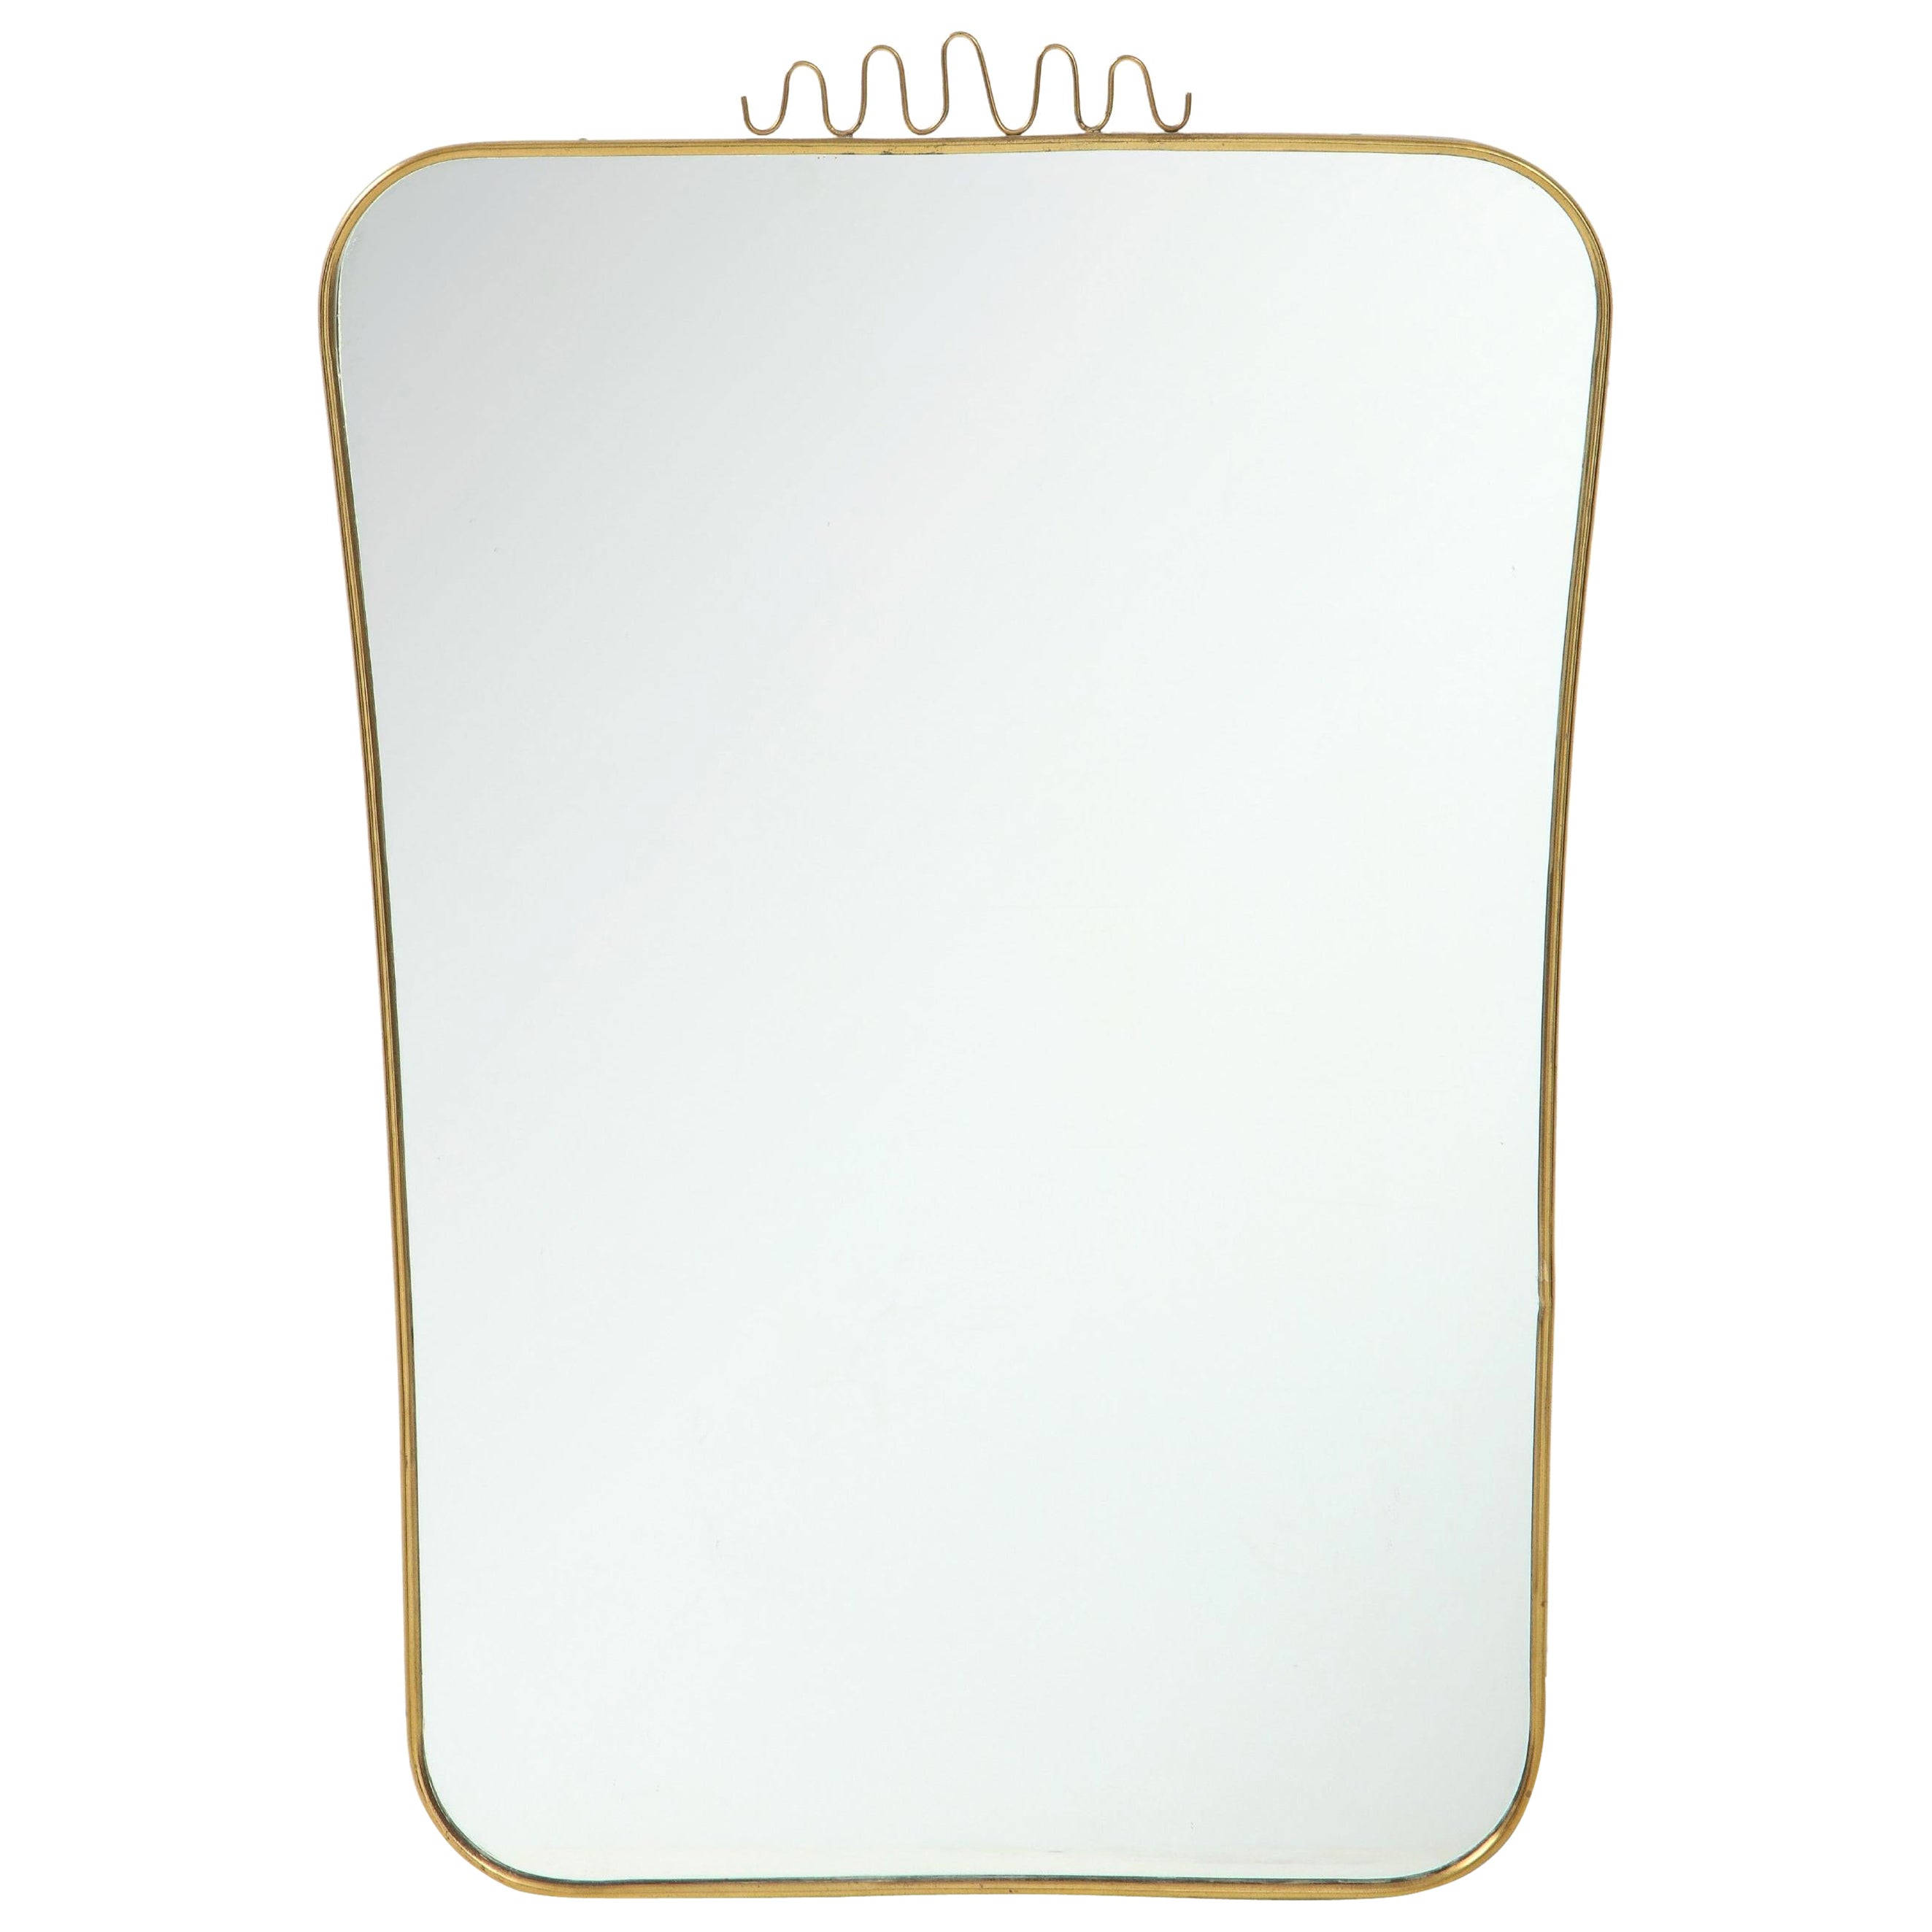 1960s Italian Modernist Brass Wall Mirror For Sale